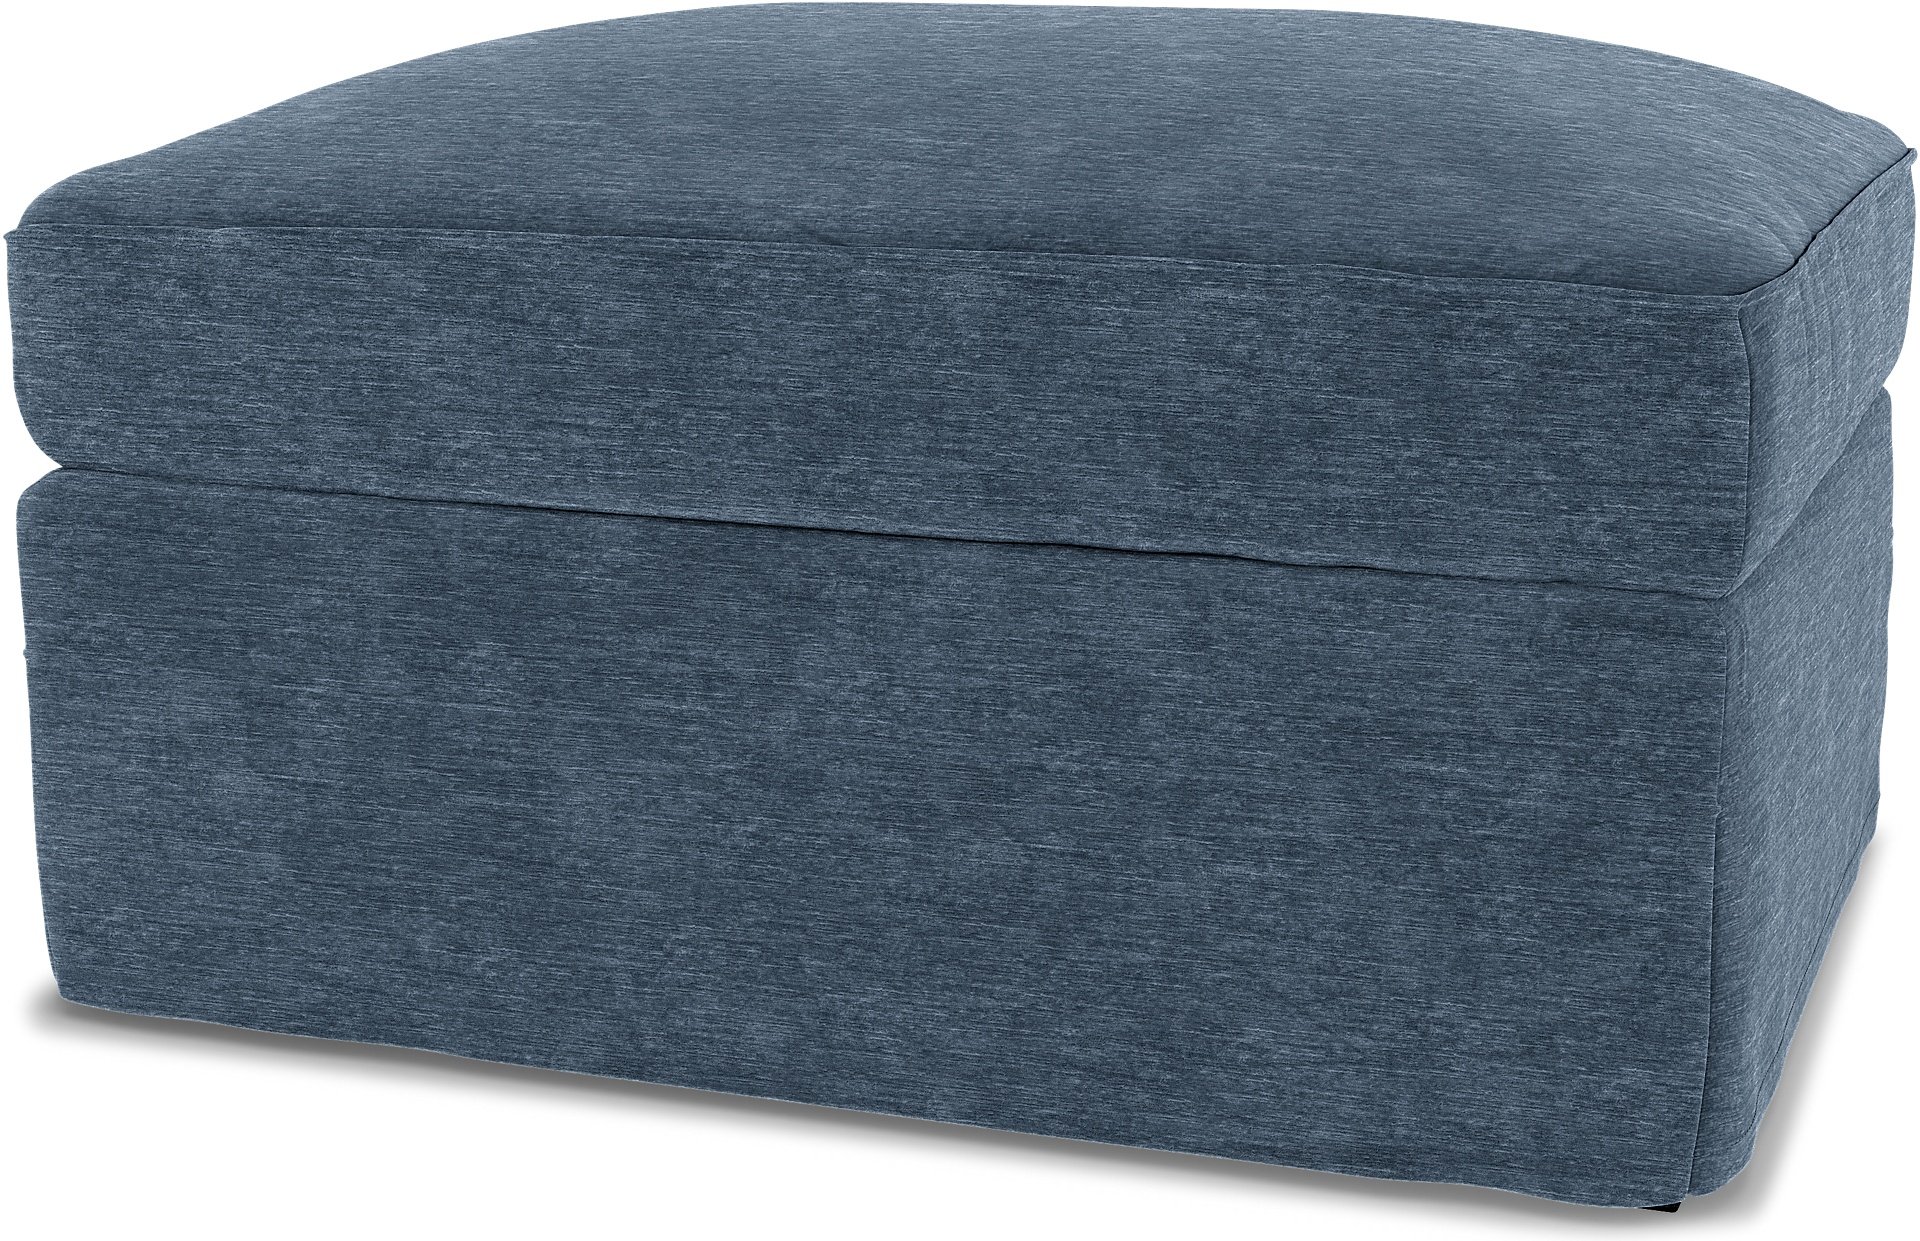 IKEA - Gronlid Footstool with Storage Cover, Mineral Blue, Velvet - Bemz